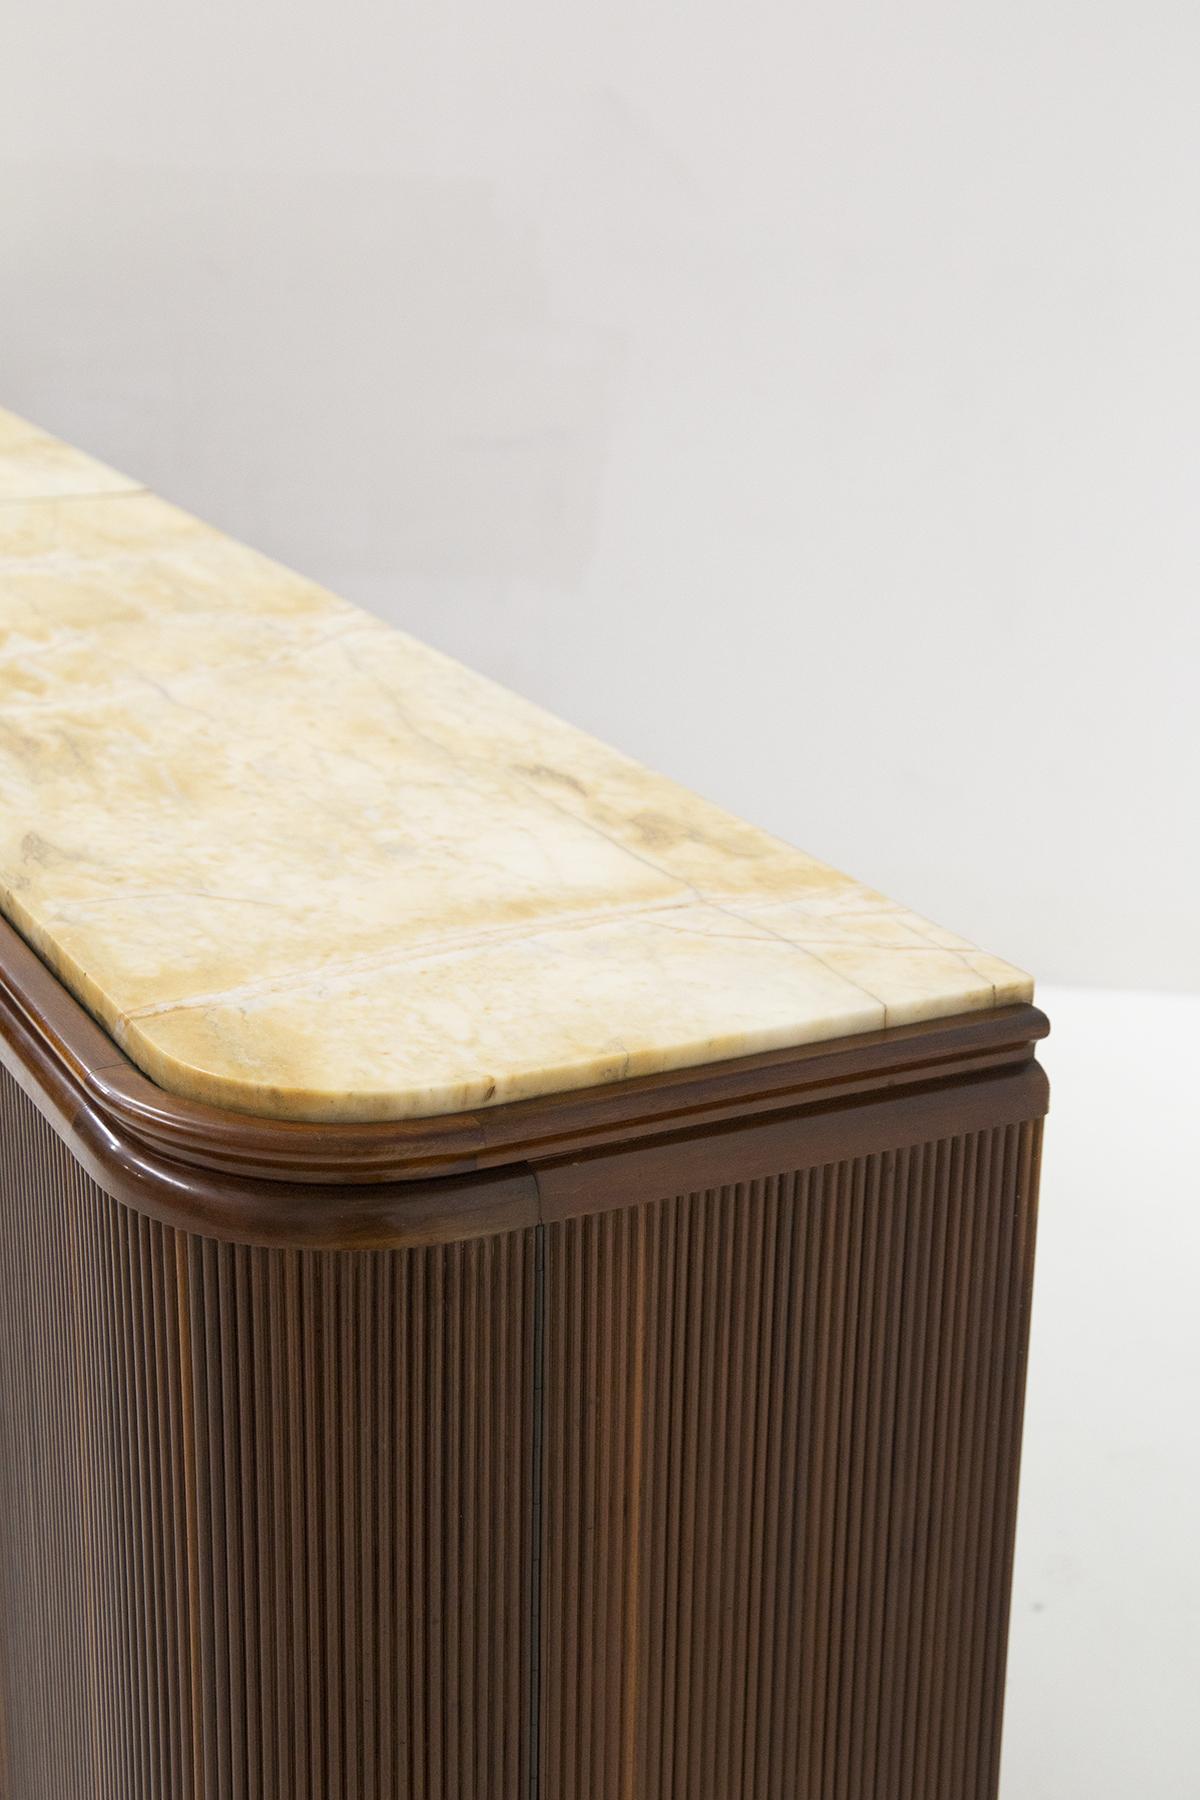 Gino Rancati Rare Wood and Marble Sideboard, Published 8